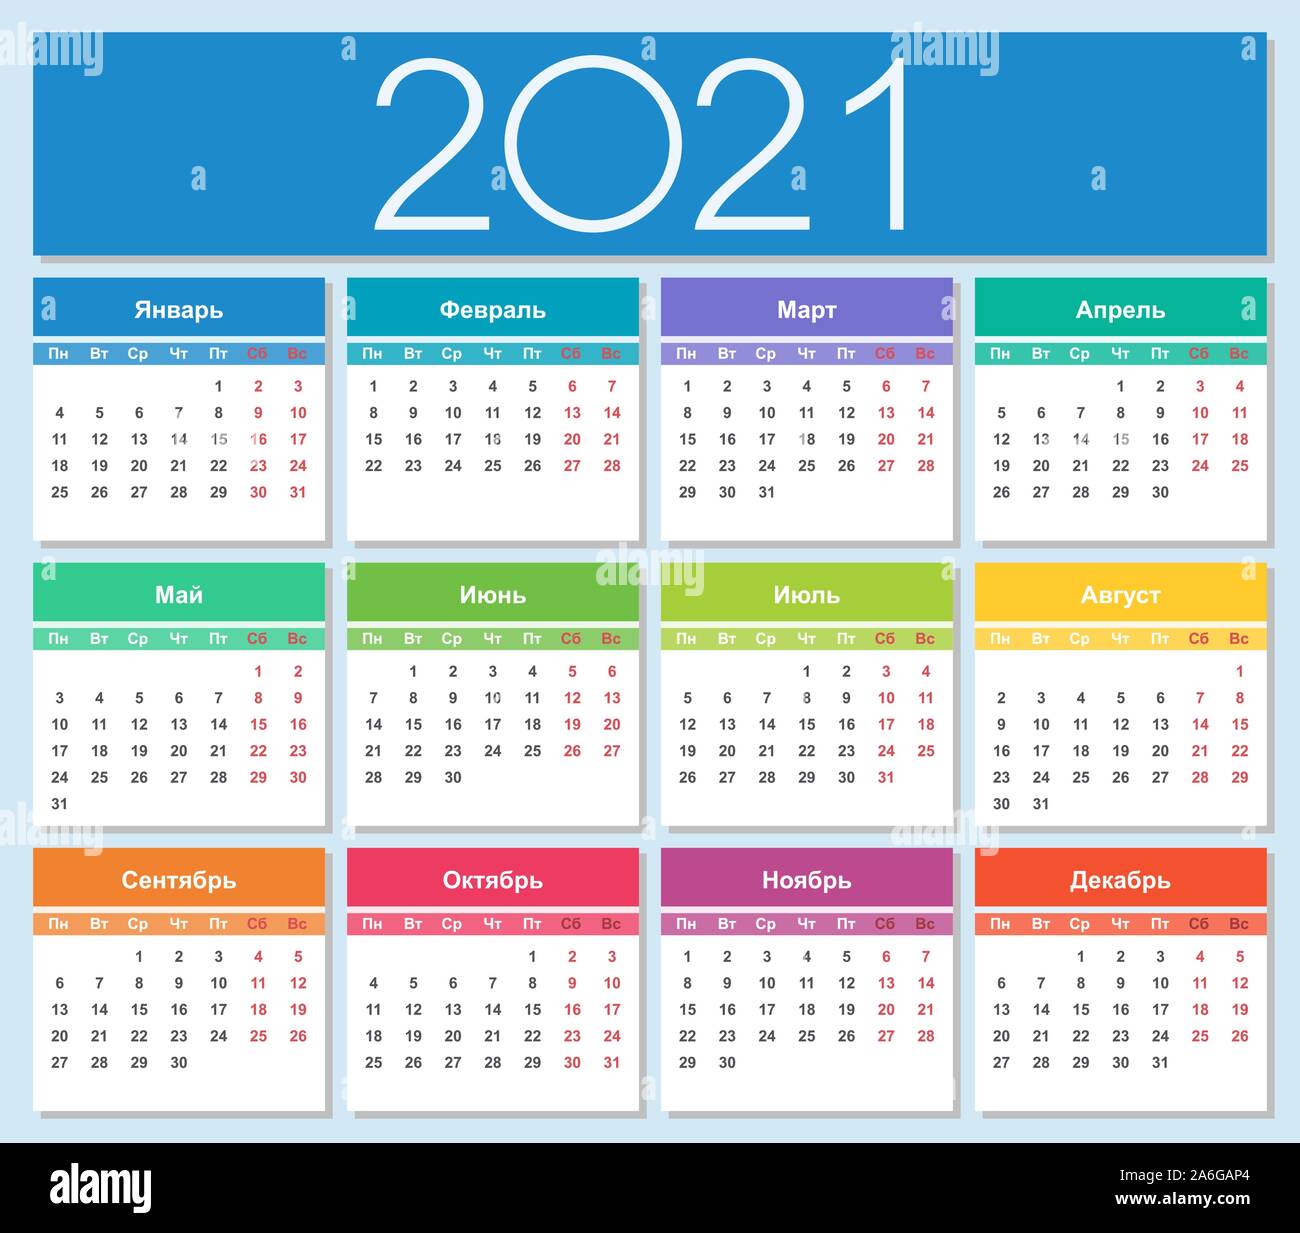 2021 Calendar Year